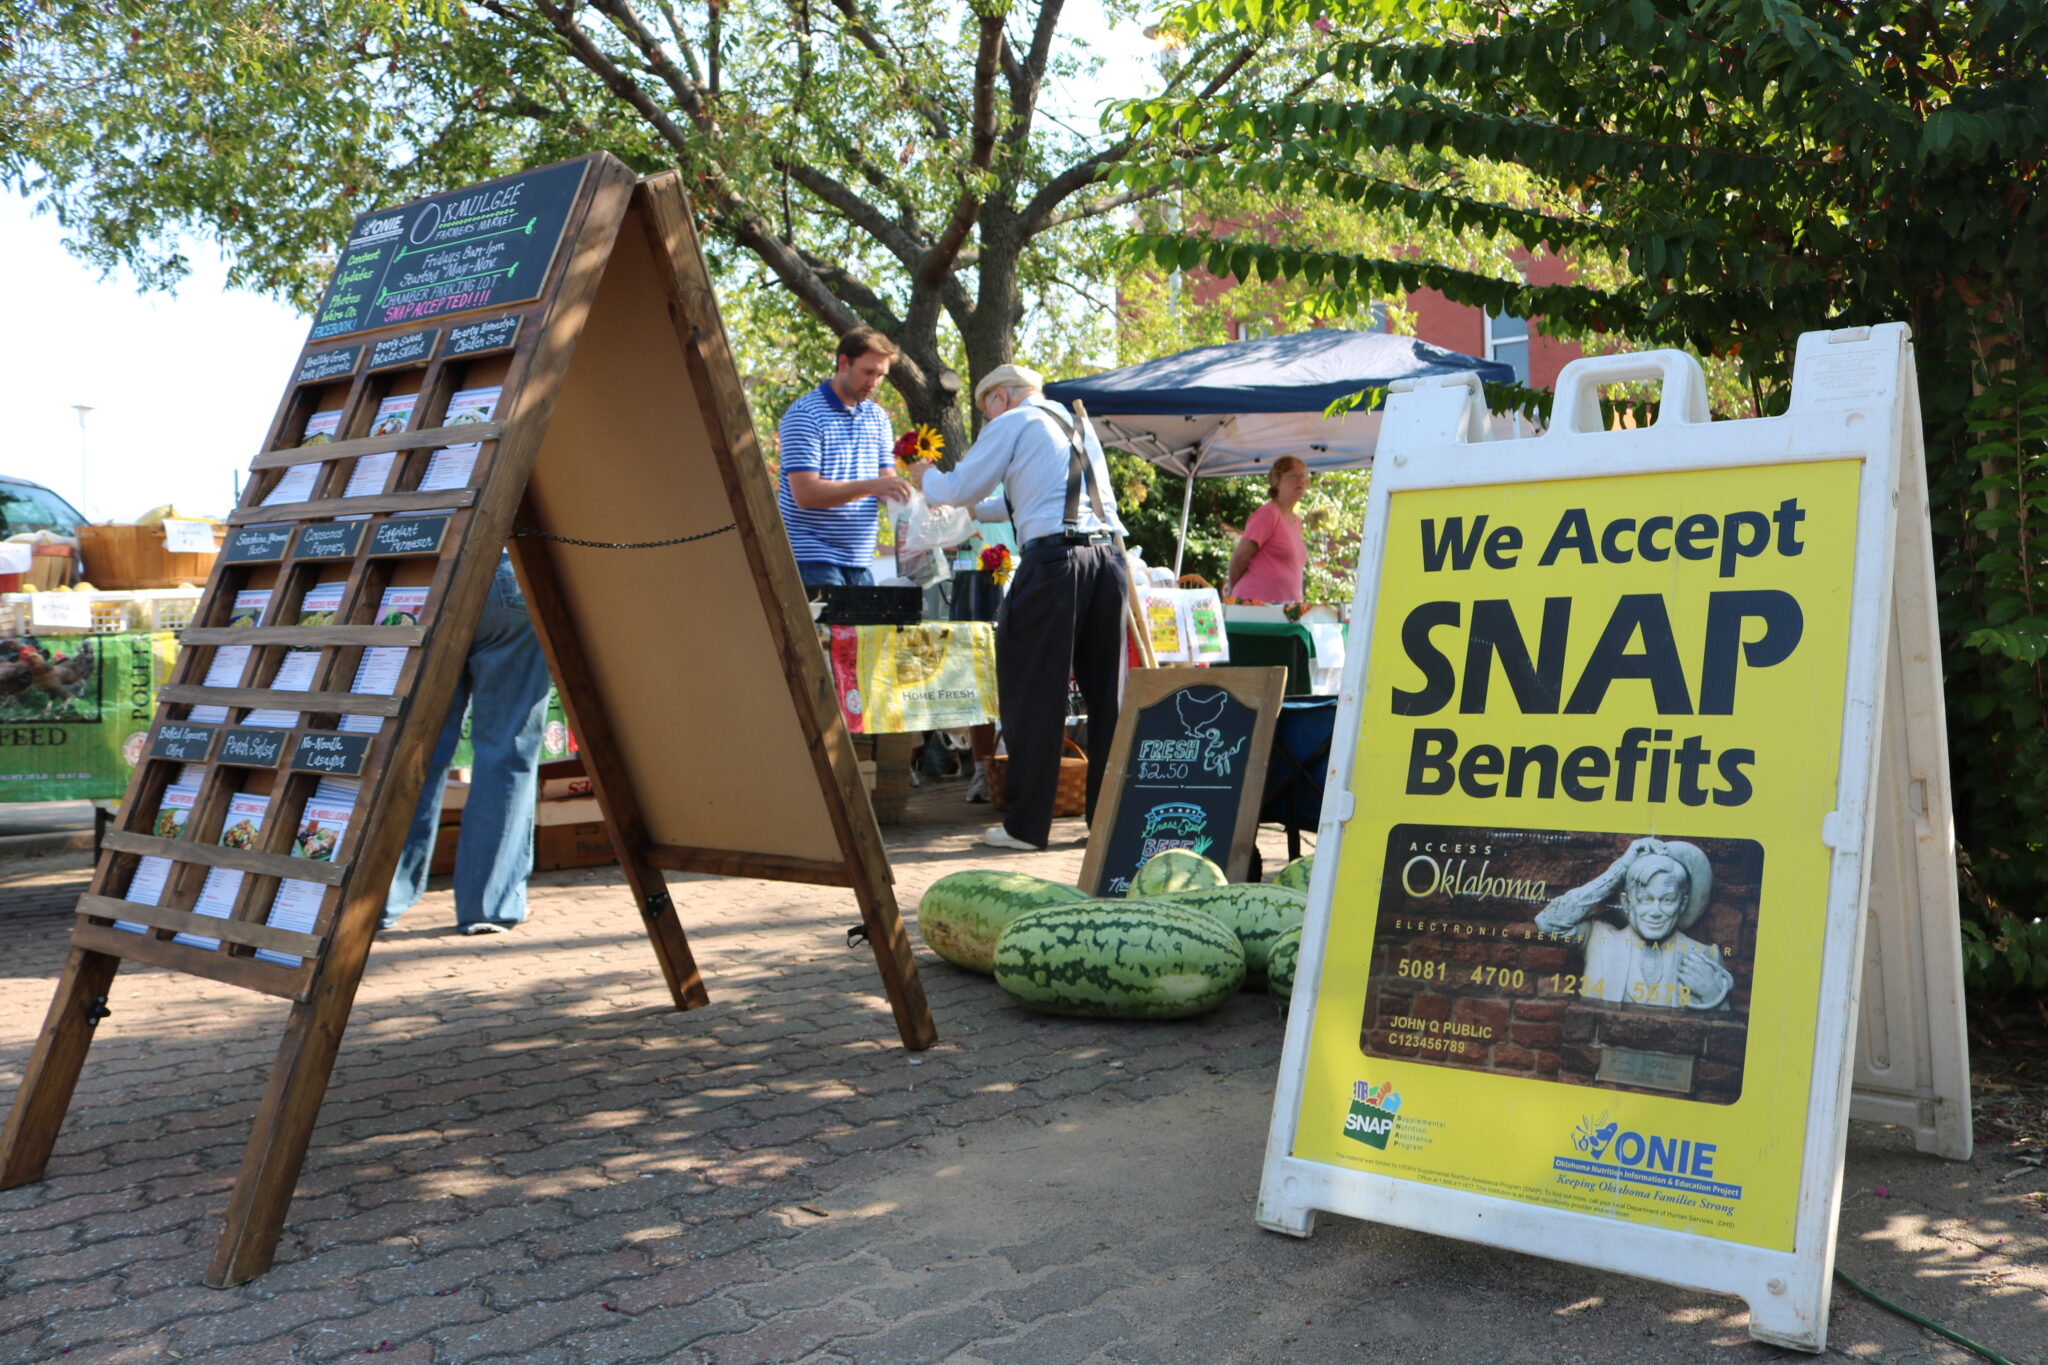 "We Accept SNAP Benefits" sign at Oklahoma Farmers Market